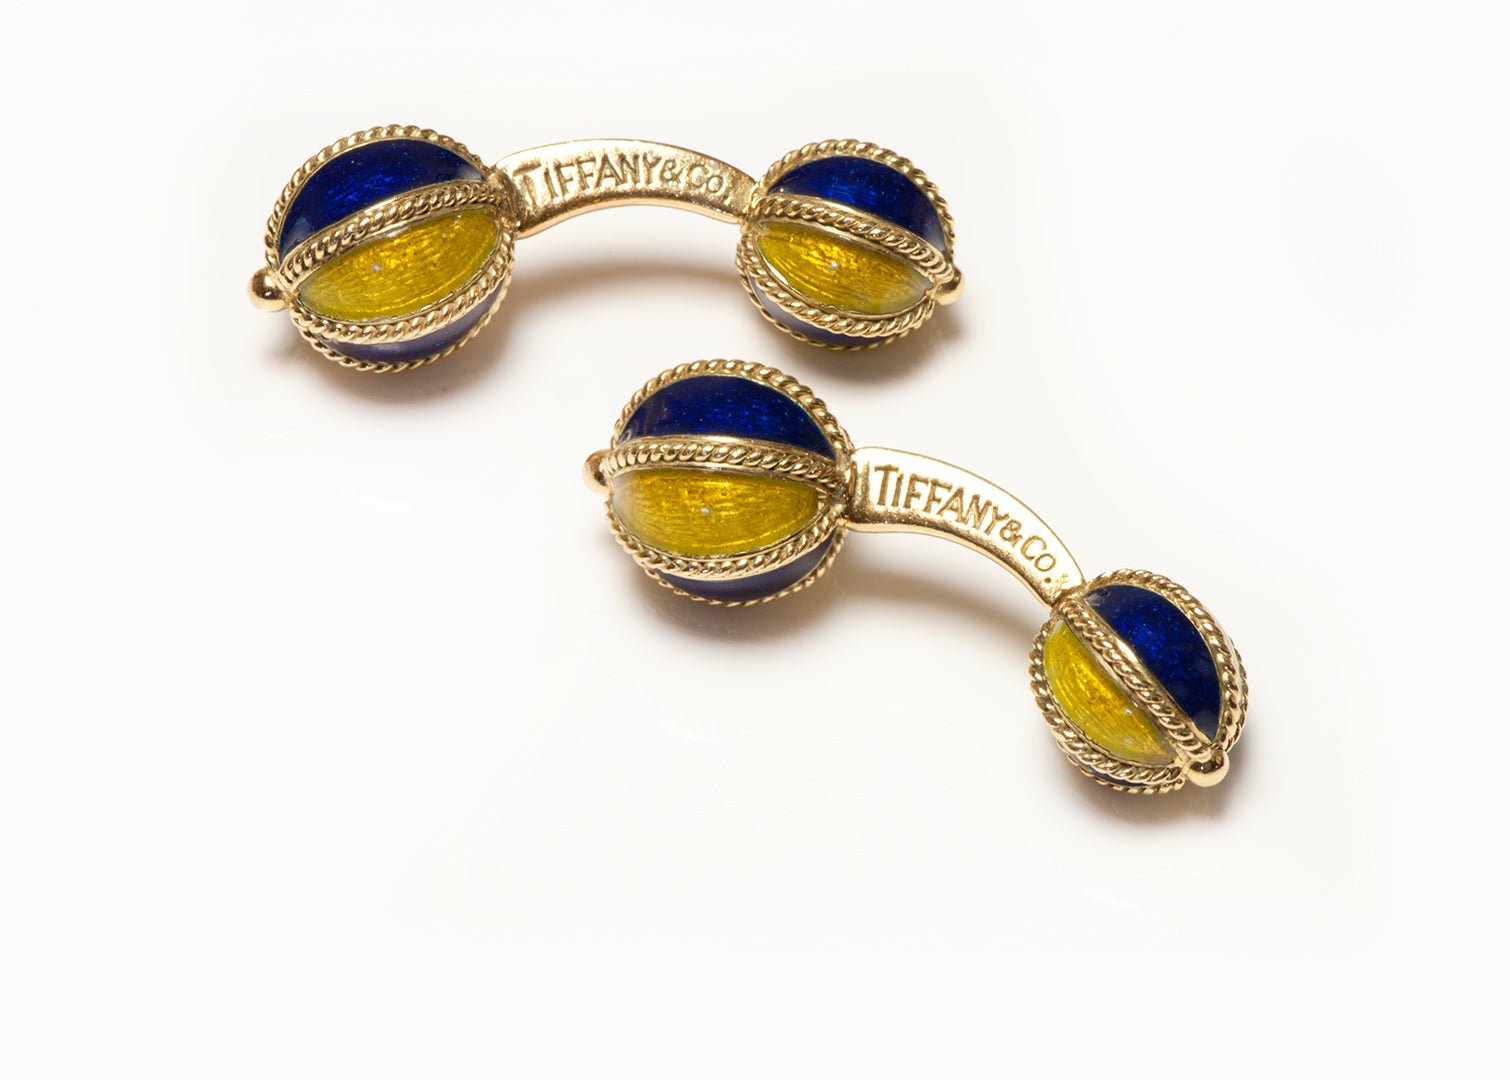 Tiffany & Co. 18K Gold Blue Enamel Ball Cufflinks